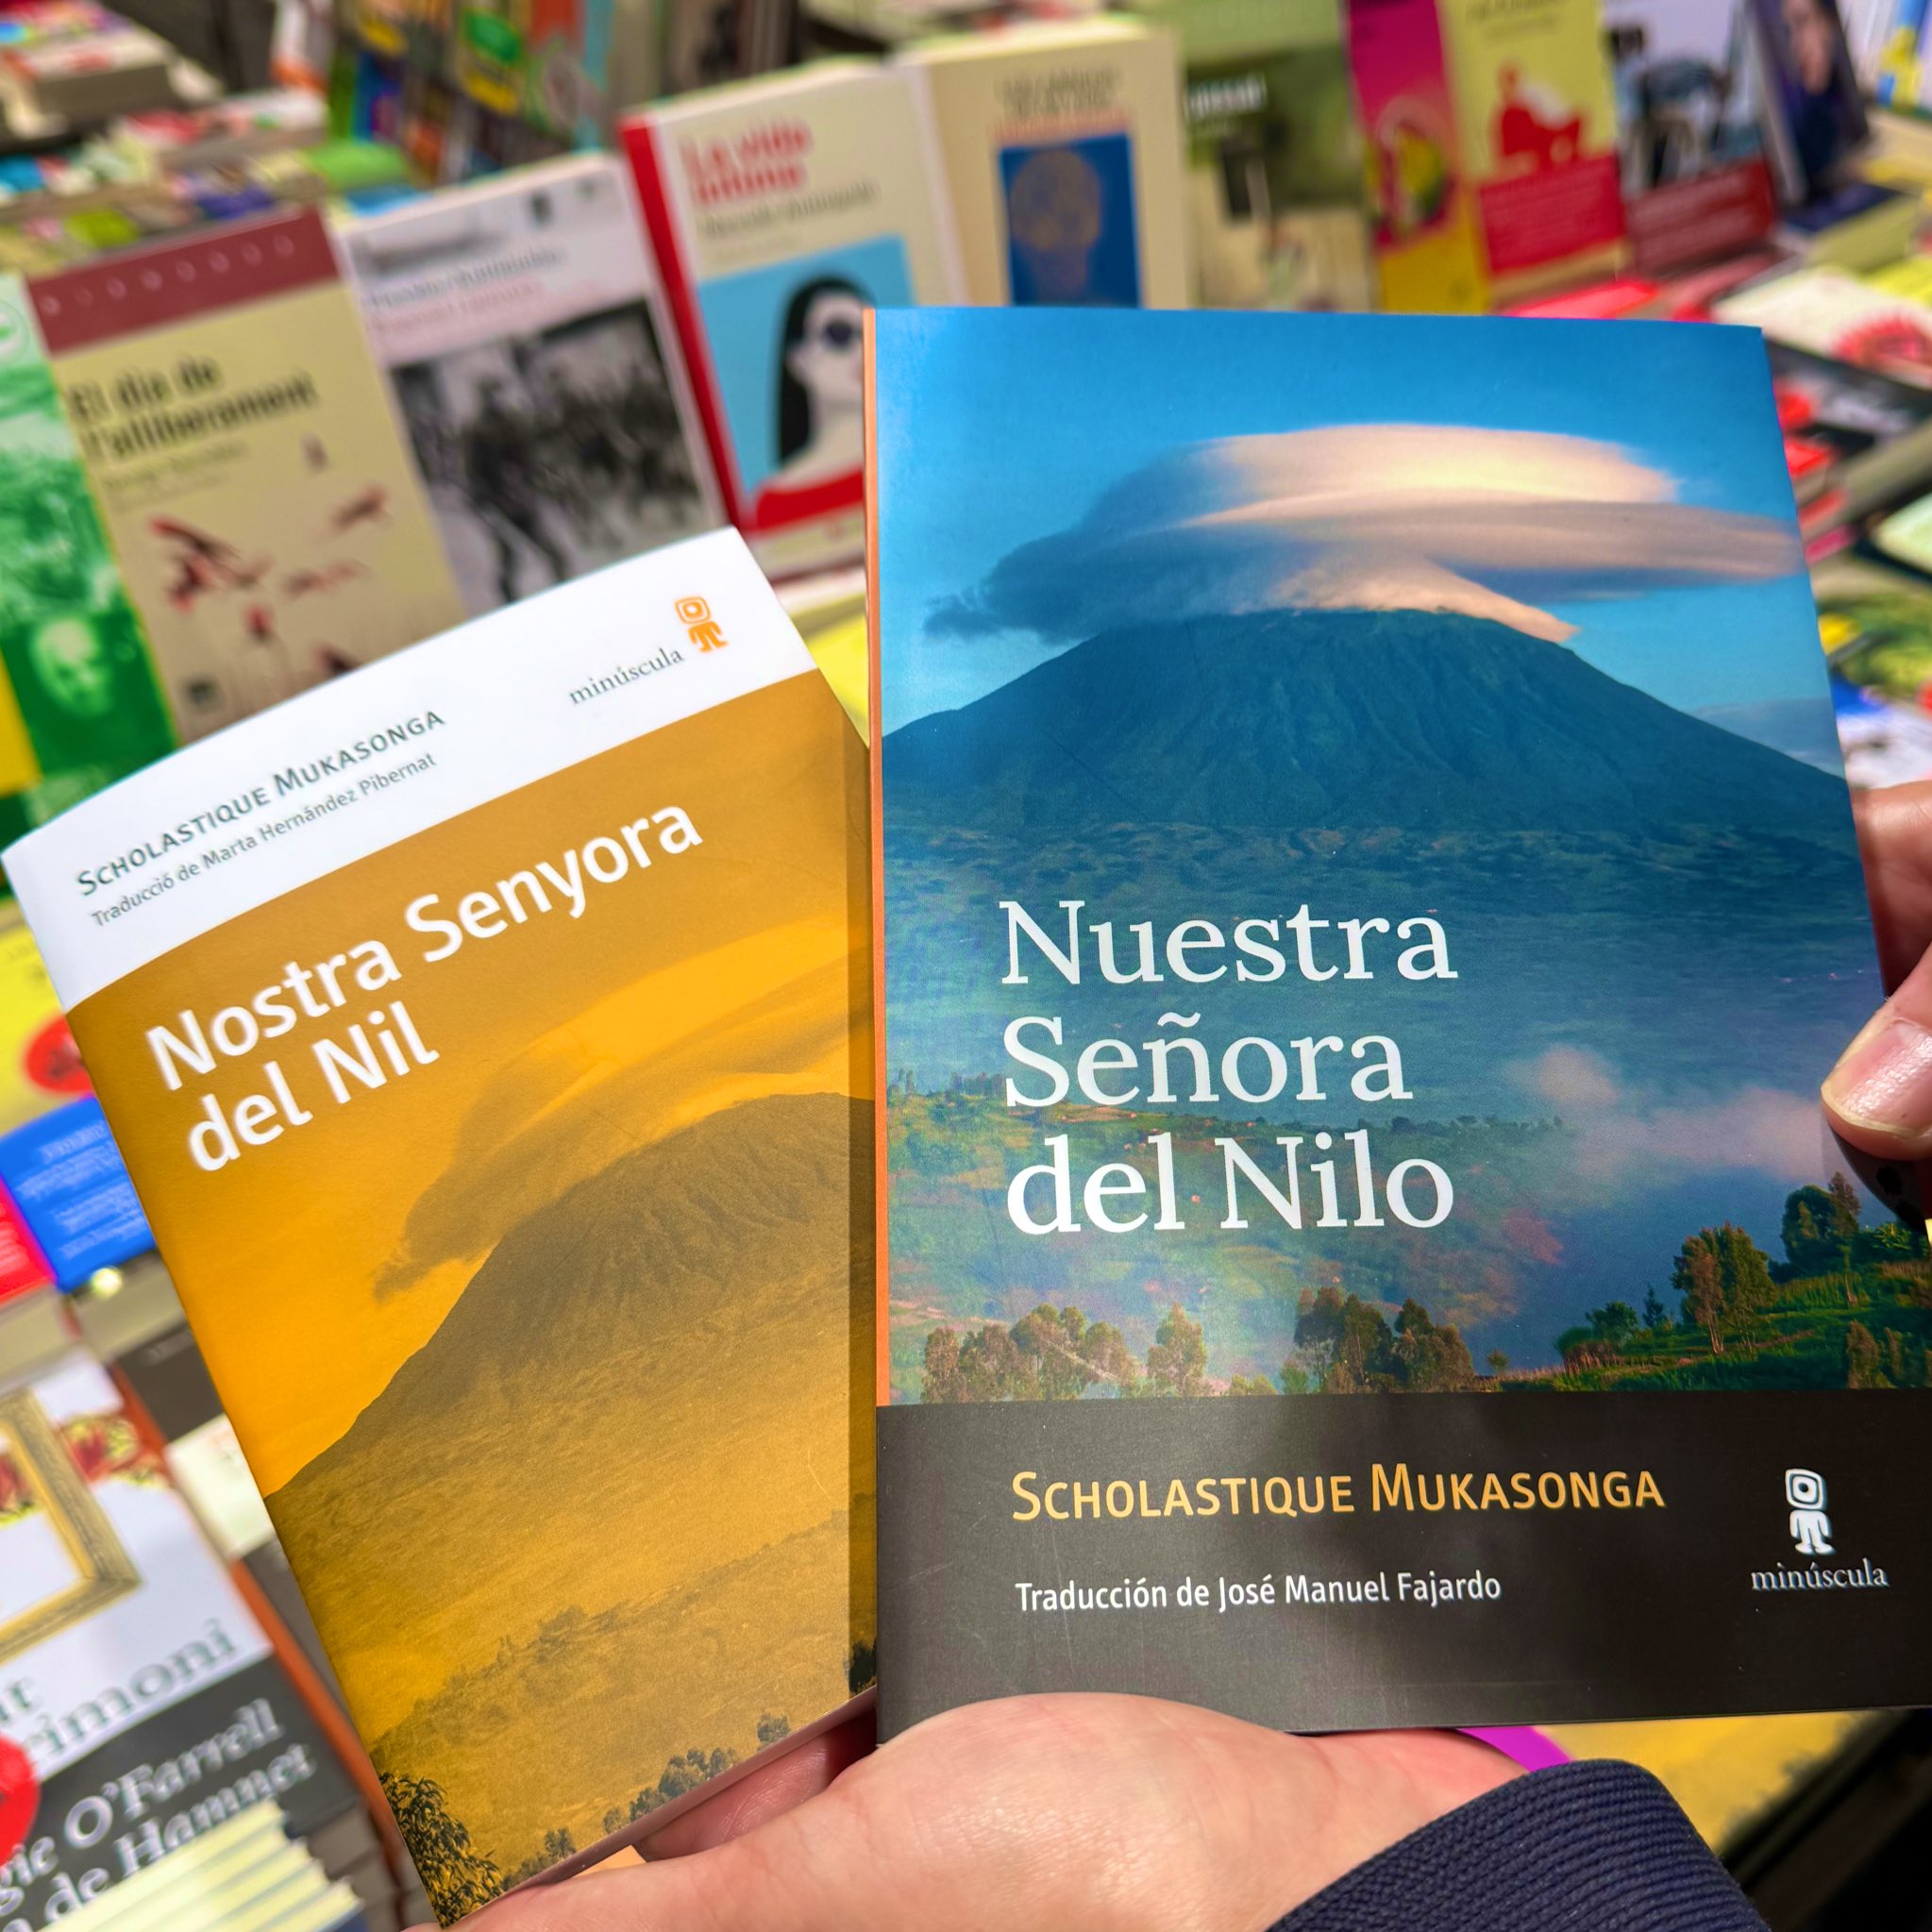 my new books in Catalan “Nostra Senyora del Nilo” and “Nuestro Señora del Nilo” in Castillan is out now on editorial Minuscula - Rwanda novel